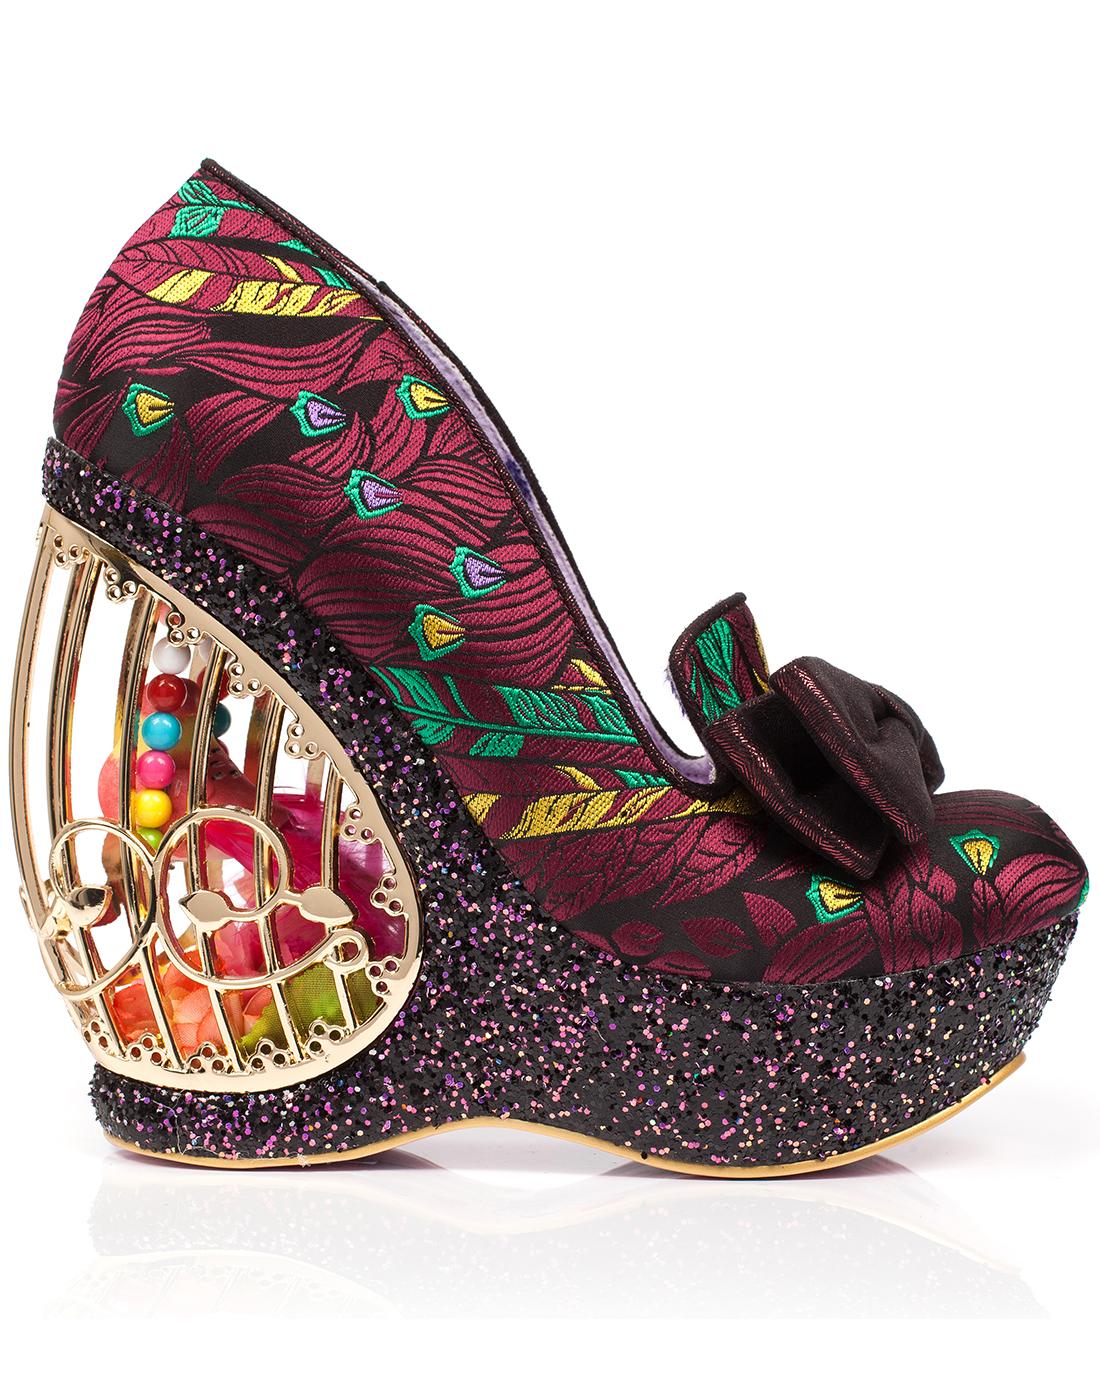 Ornate Agador IRREGULAR CHOICE Birdcage Shoes